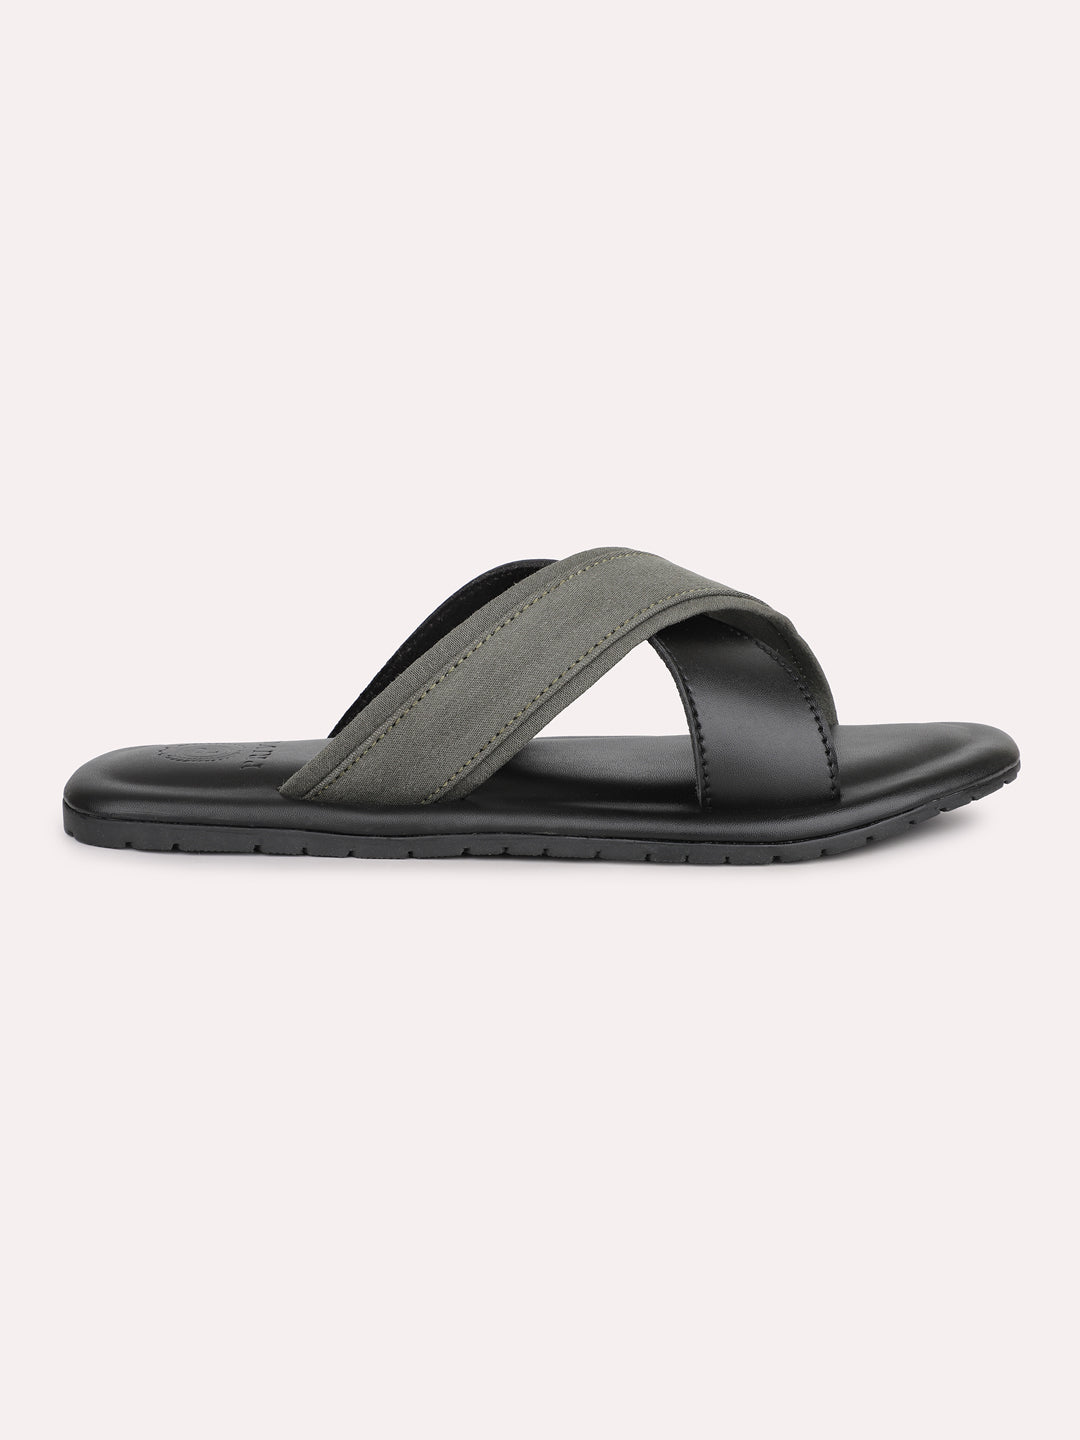 Privo Grey Denim and Black Casual Sandals For Men